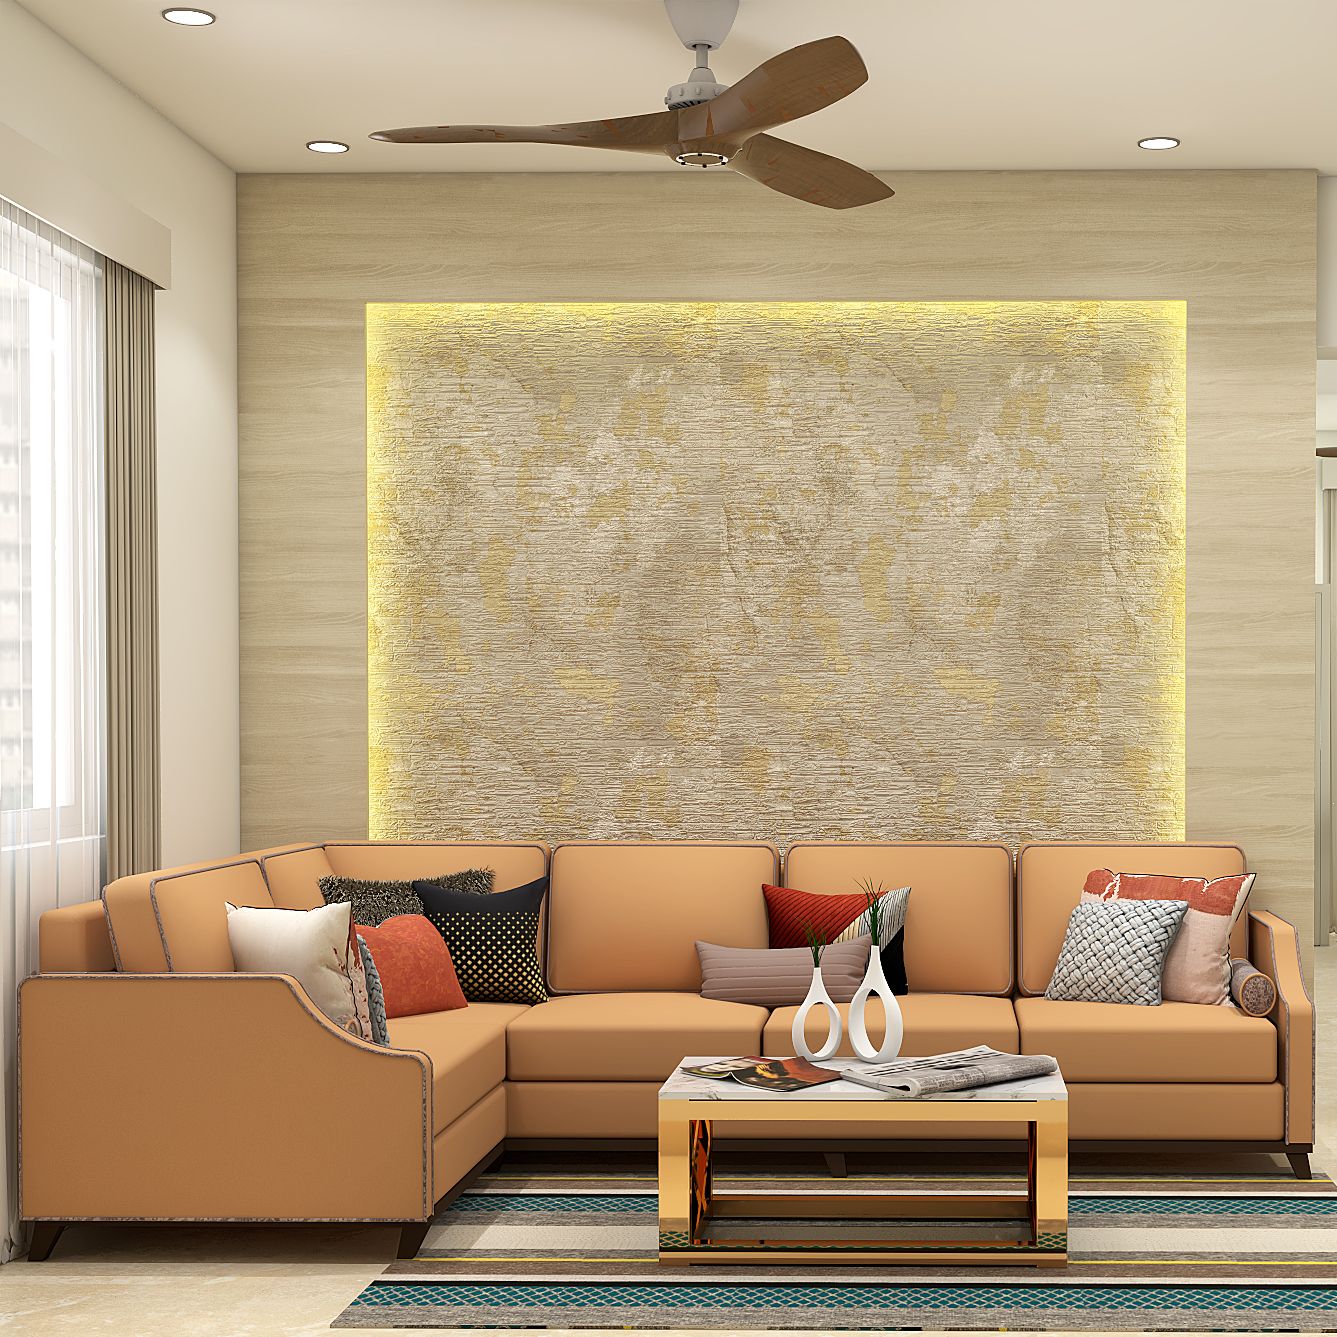 Contemporary Living Room Design With An Orange L-Shaped Sofa